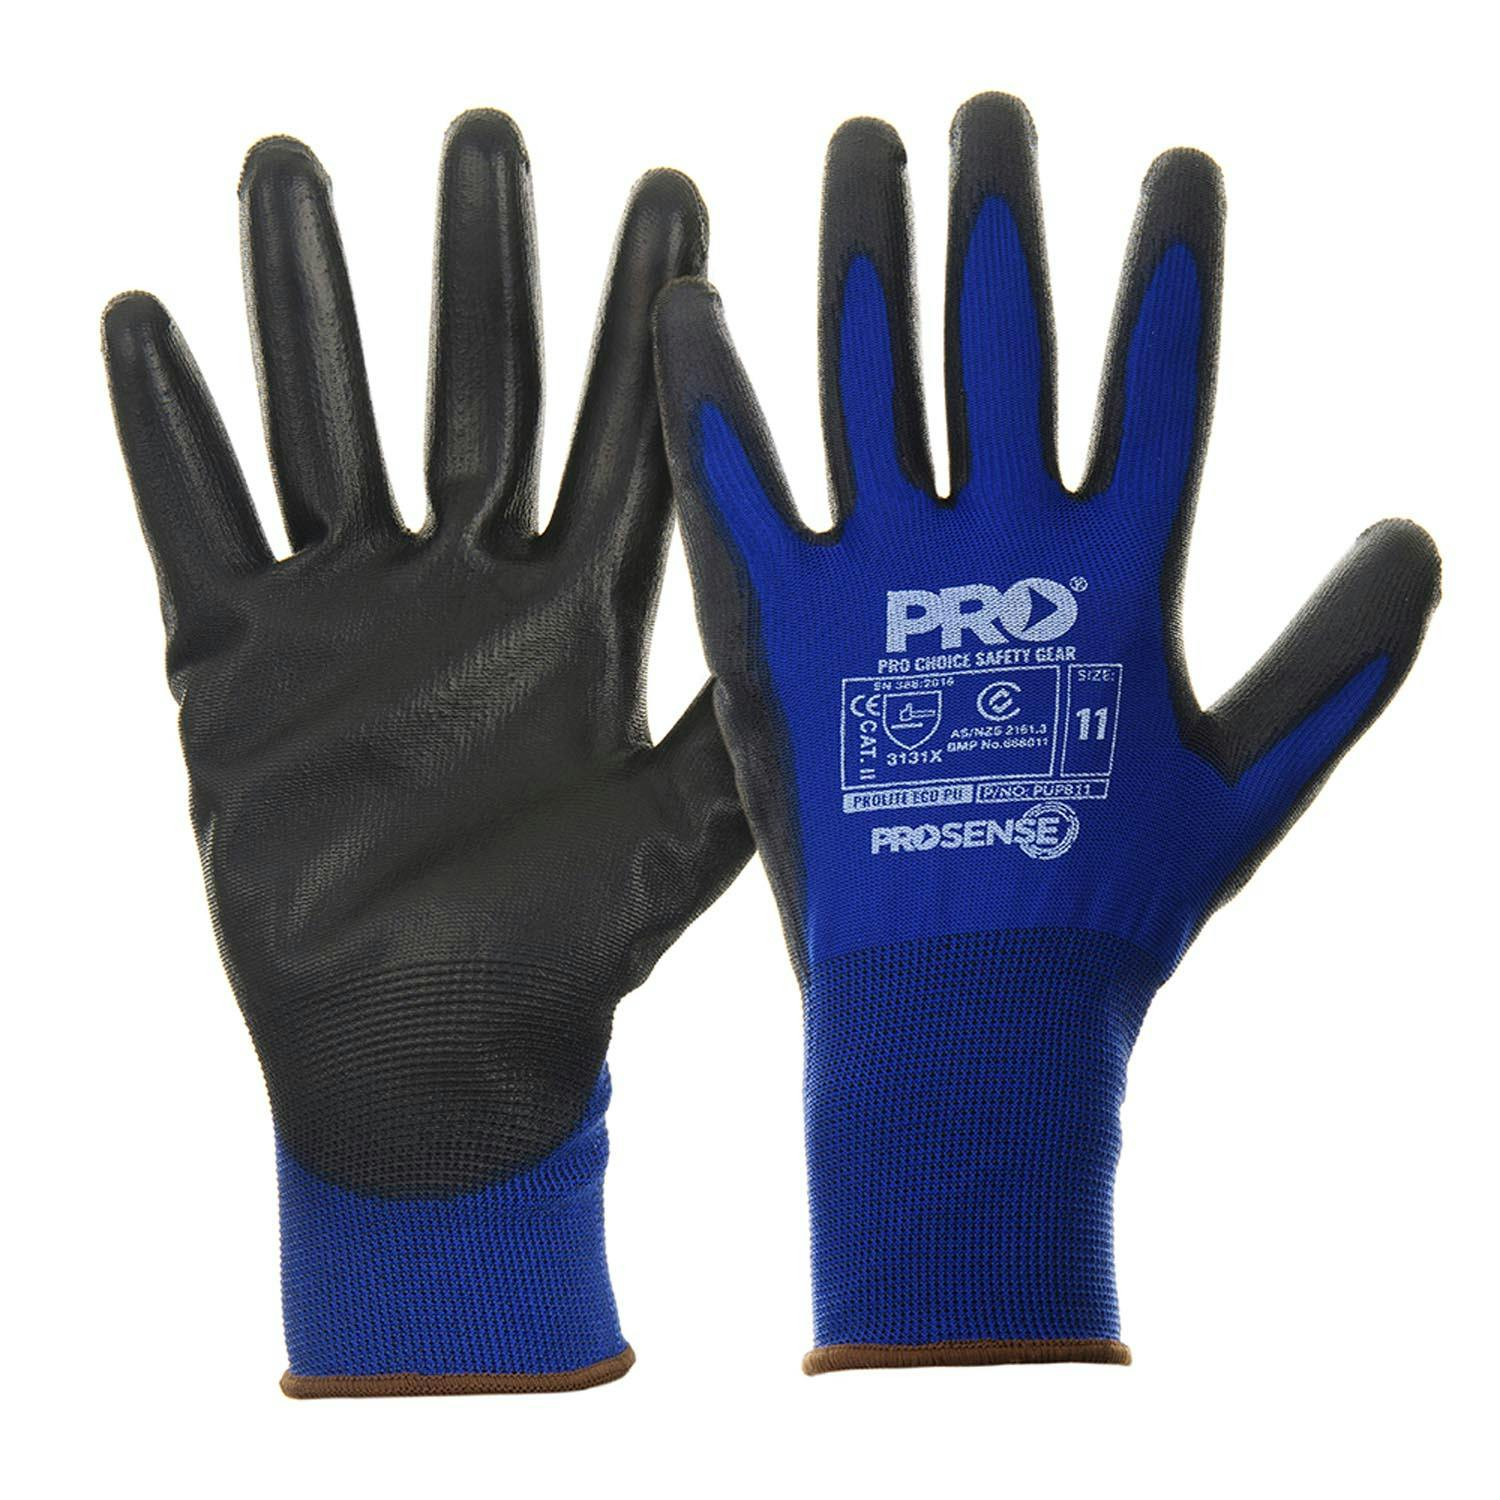 Pro Choice Prosense Prolite Eco Pu Glove 12Pr Bulk Pack